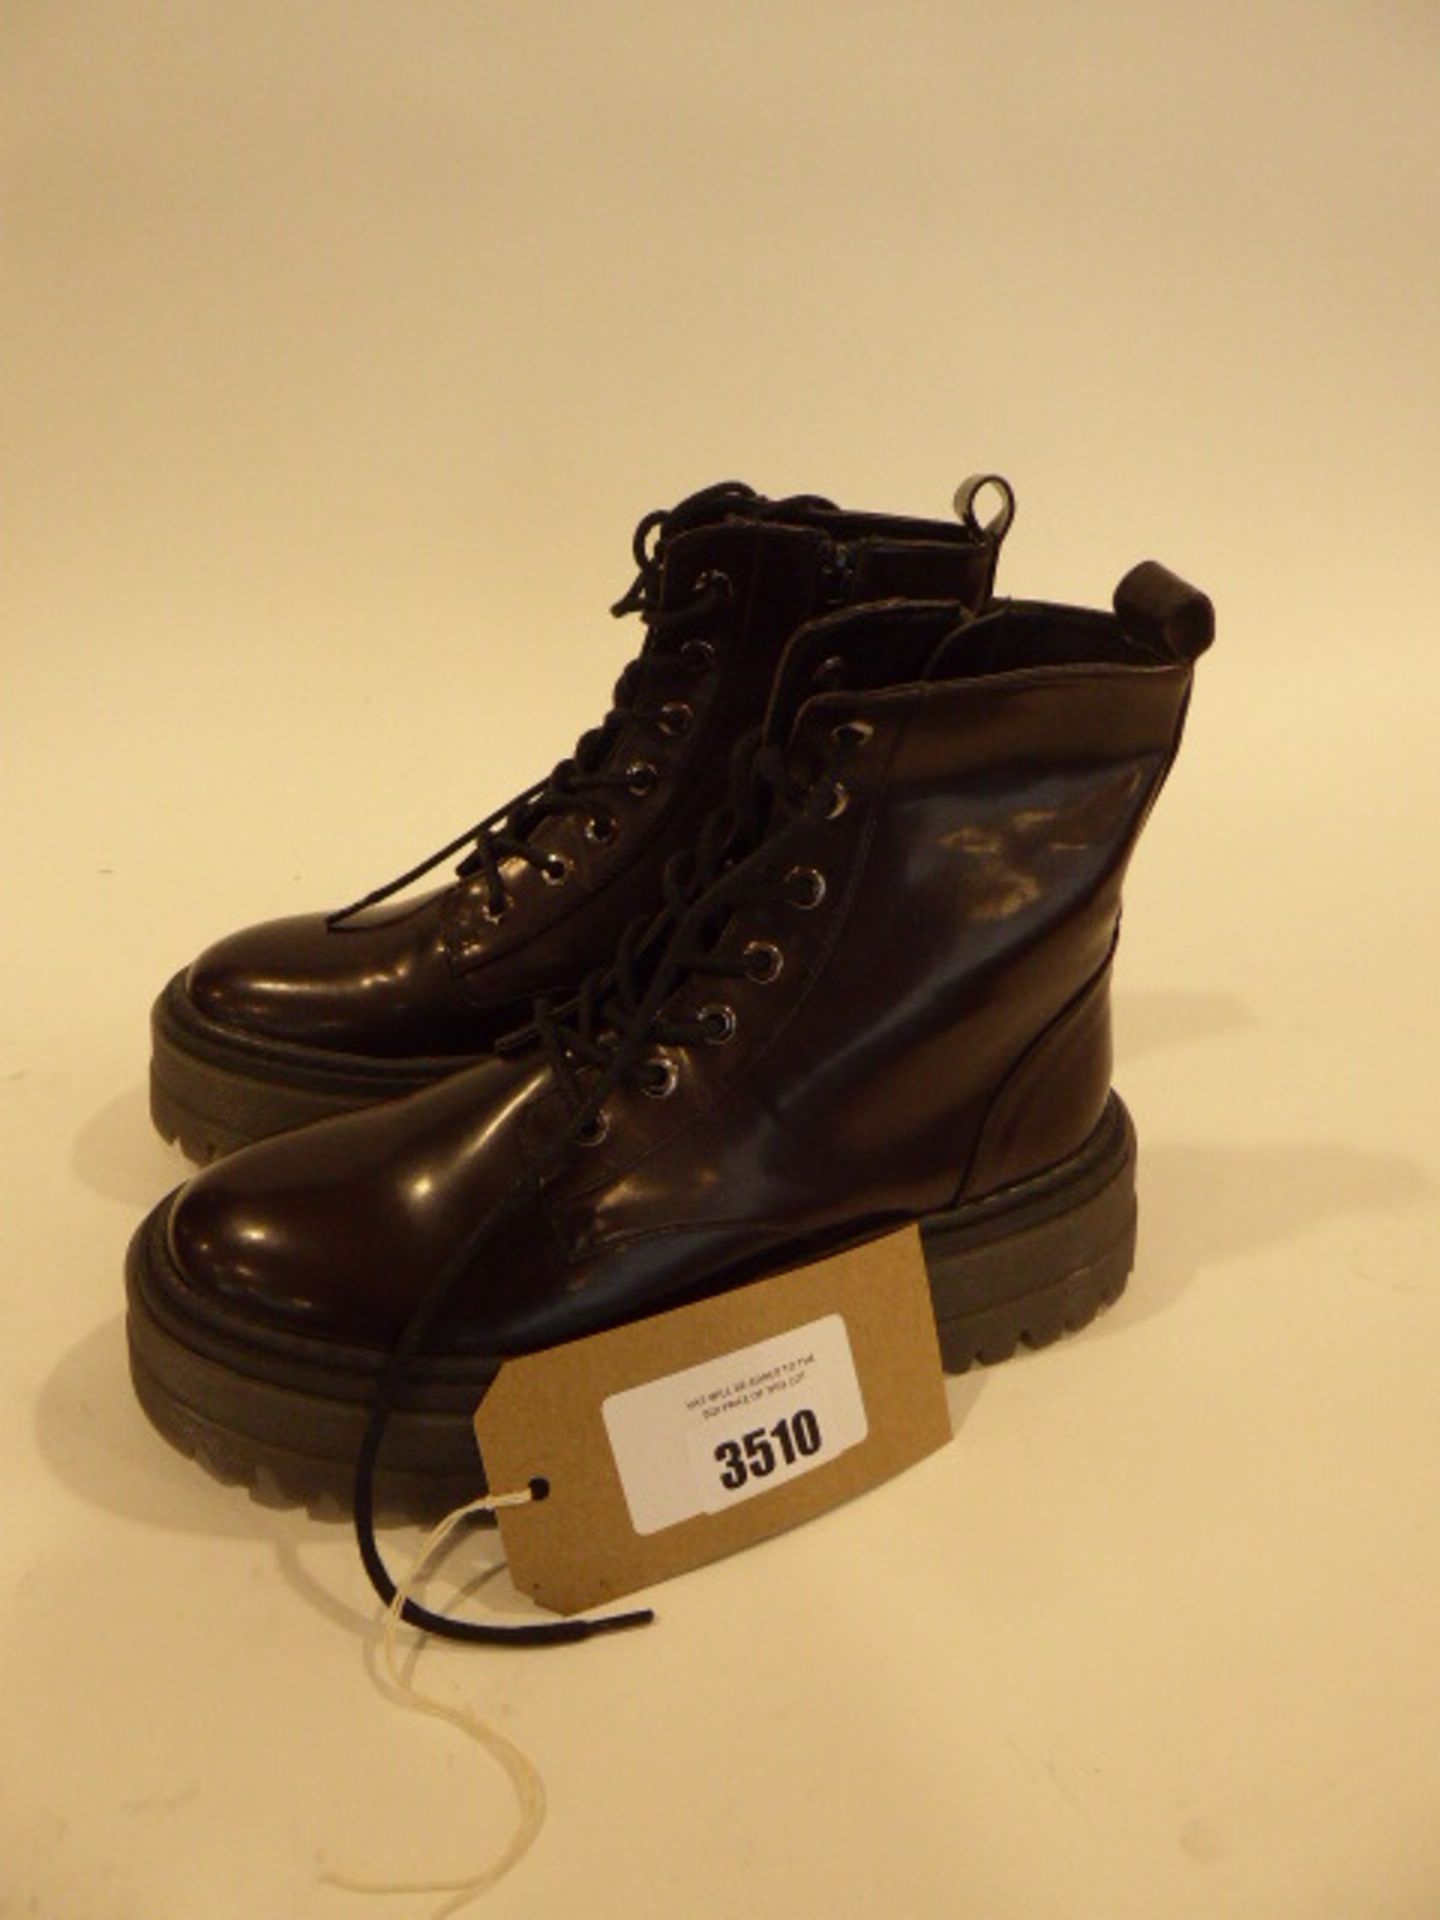 3510 - Bershka ankle boots size EU 37